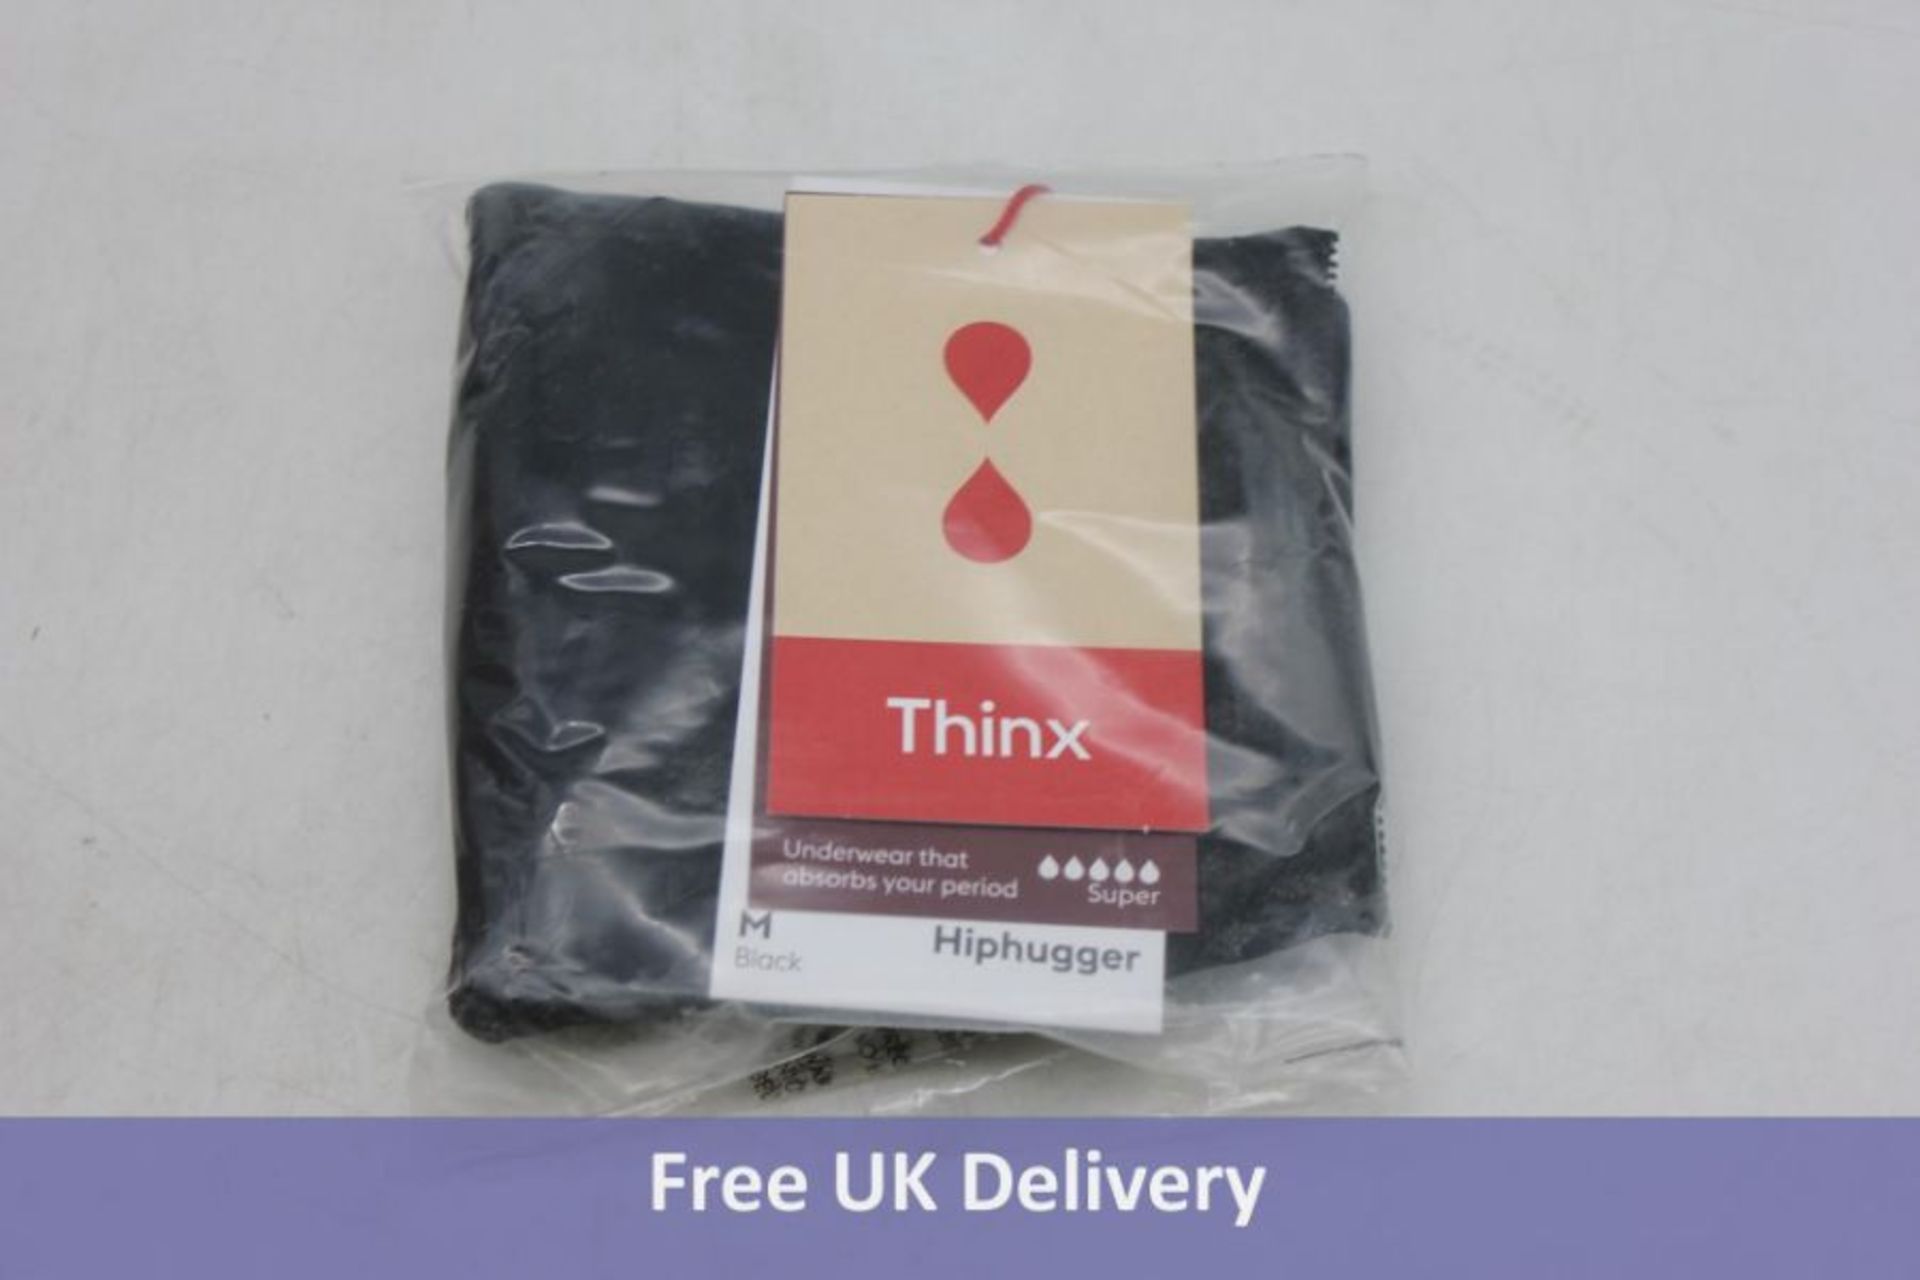 Seven Thinx underwear items to include 4x Women's Hiphuggers, Black, Medium and 3x Women's Sleep Sho